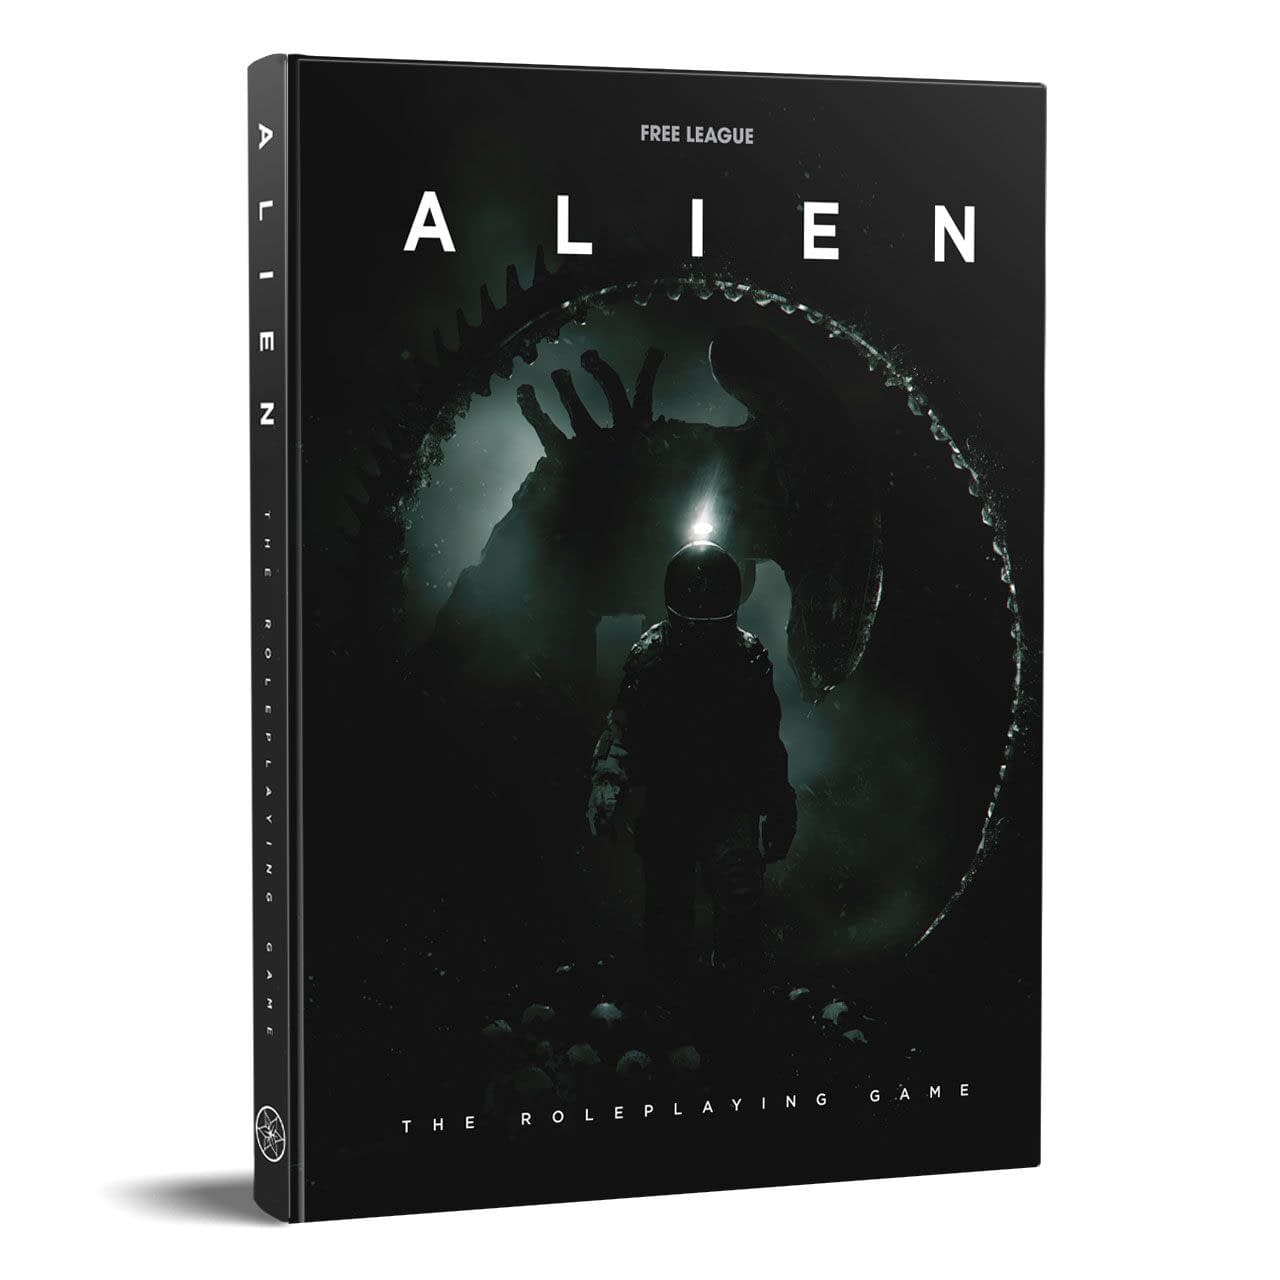 Alien Rpg Gets Release Date From Free League Publishing